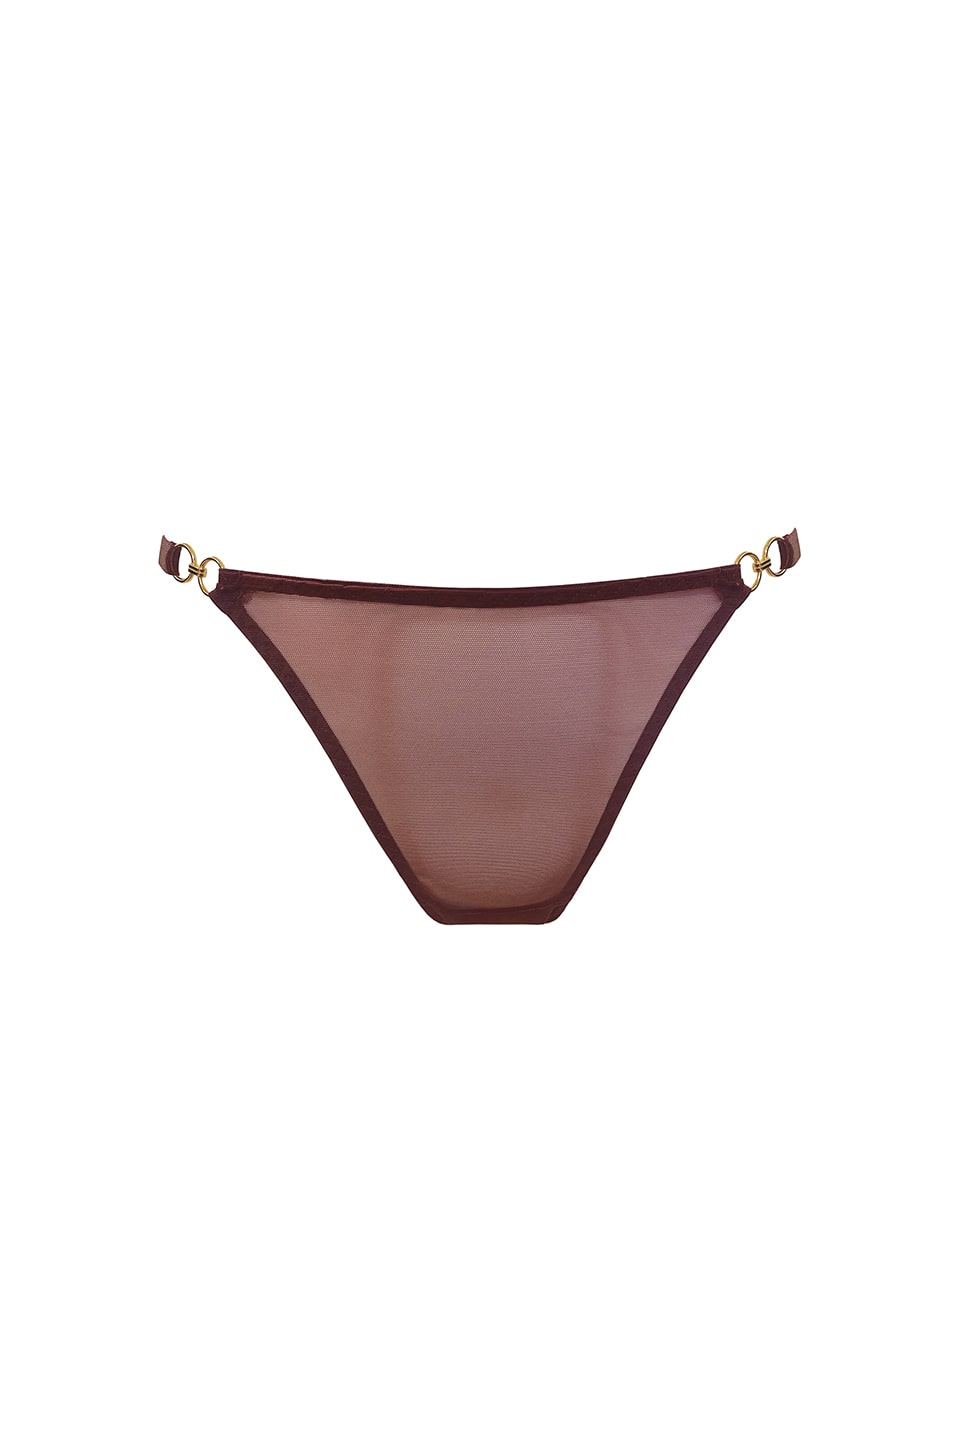 Shop online trendy Burgundy Undergarments from Bordelle Fashion designer. Product gallery 1